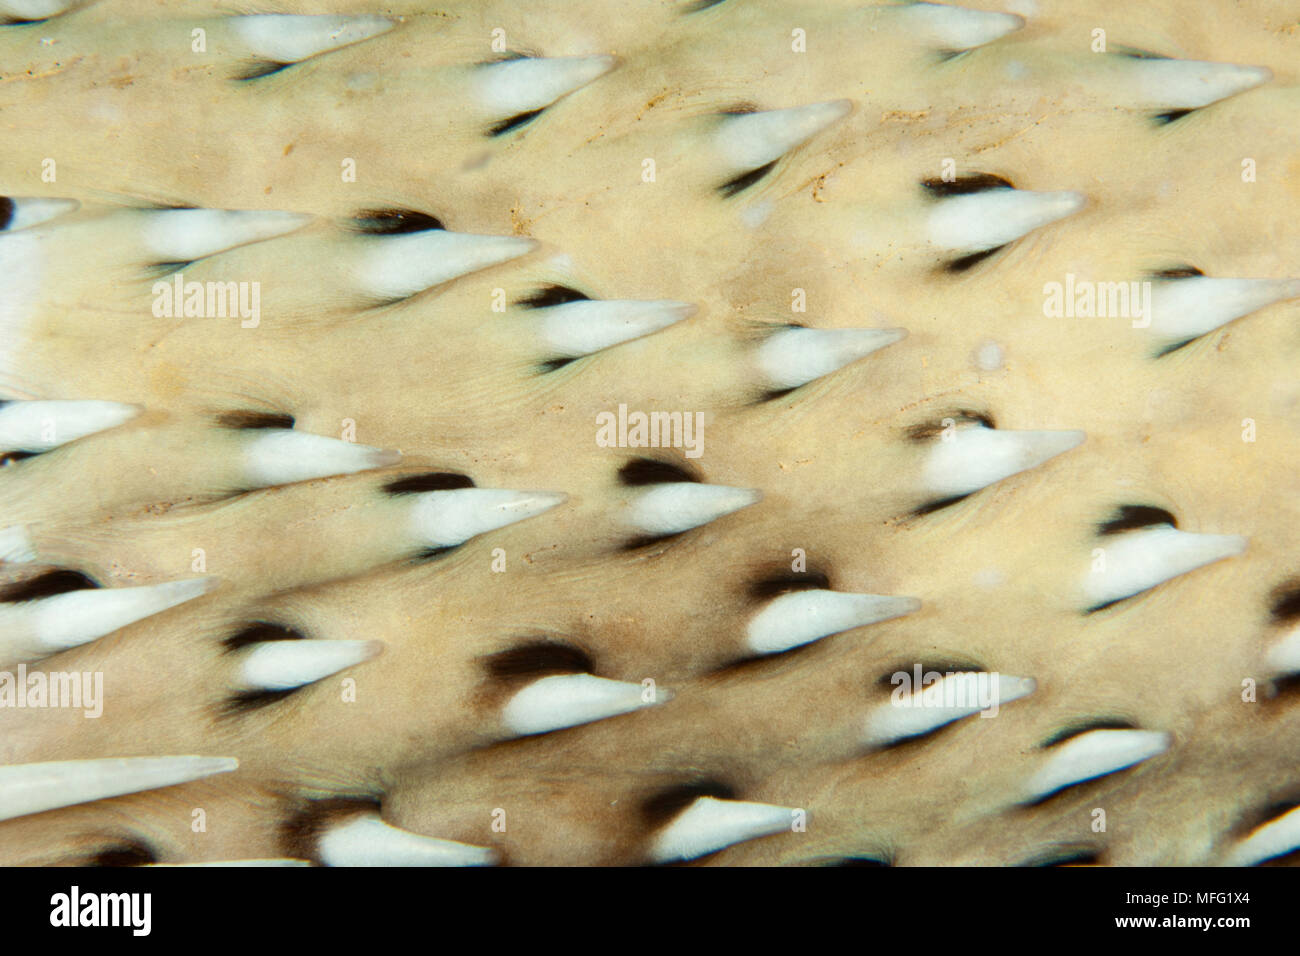 Detail of Black-blotched porcupinefish, Diodon liturosus, Maldives, Indian Ocean Stock Photo